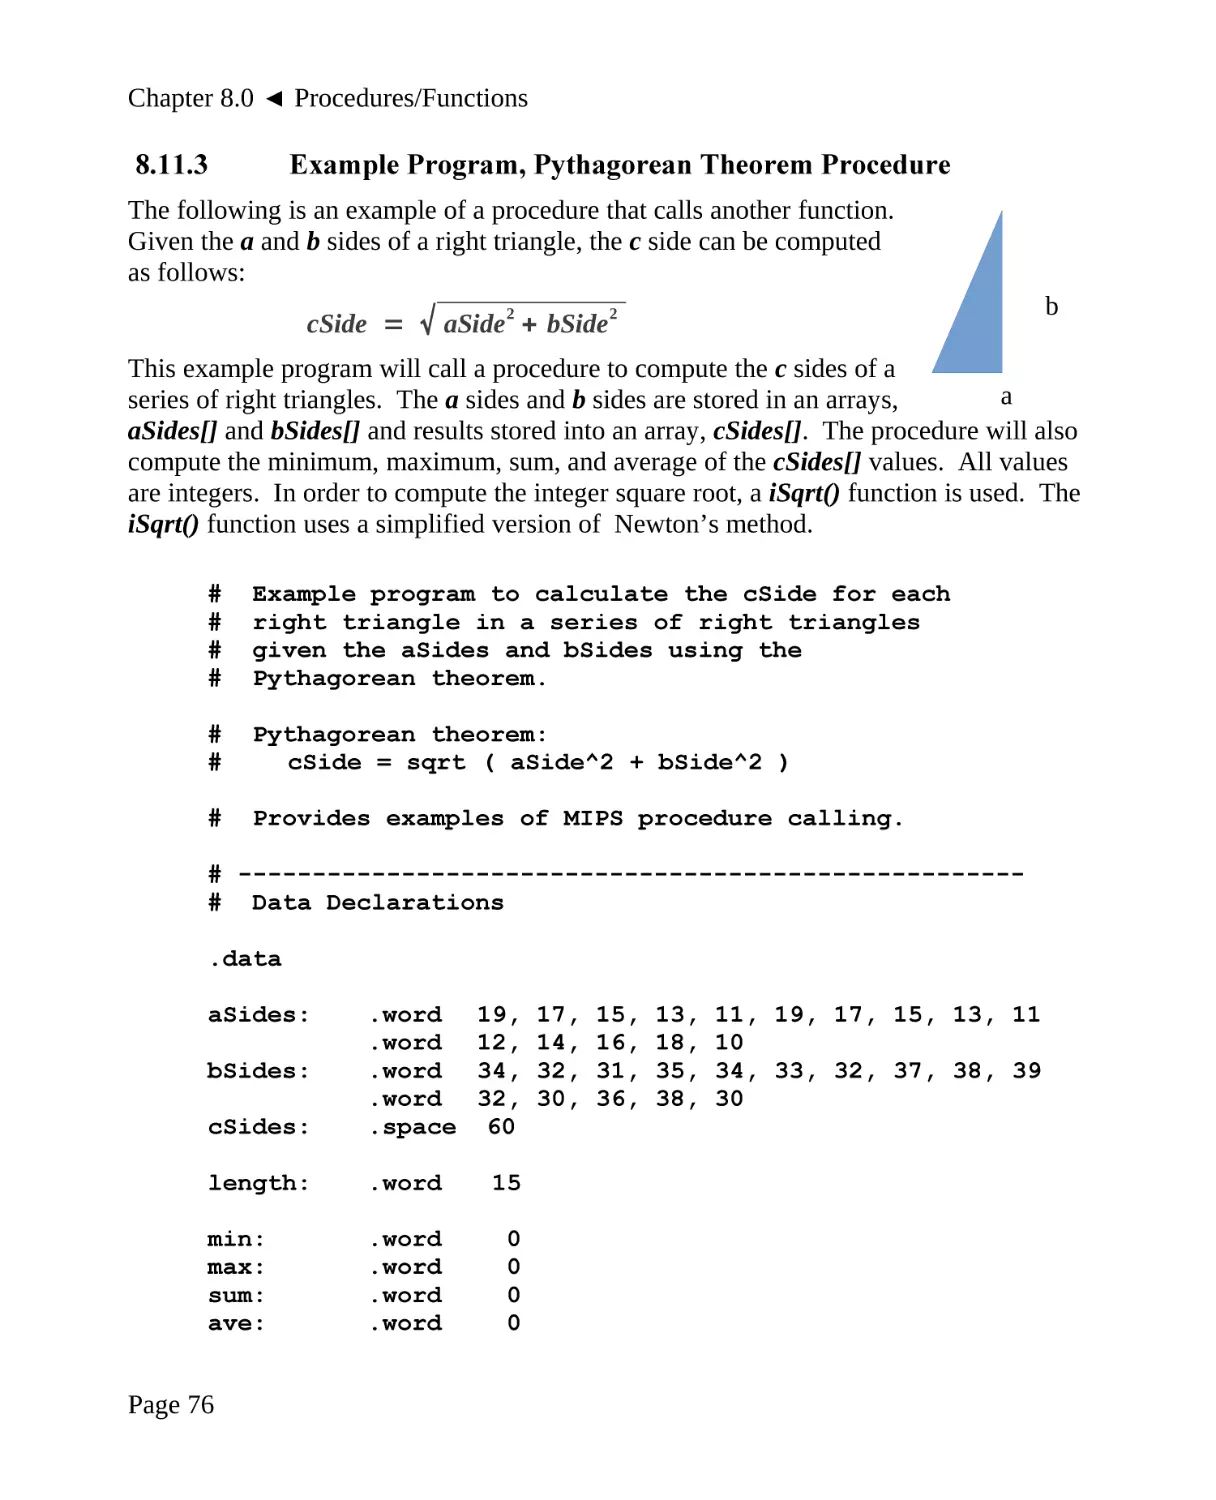 8.11.3 Example Program, Pythagorean Theorem Procedure